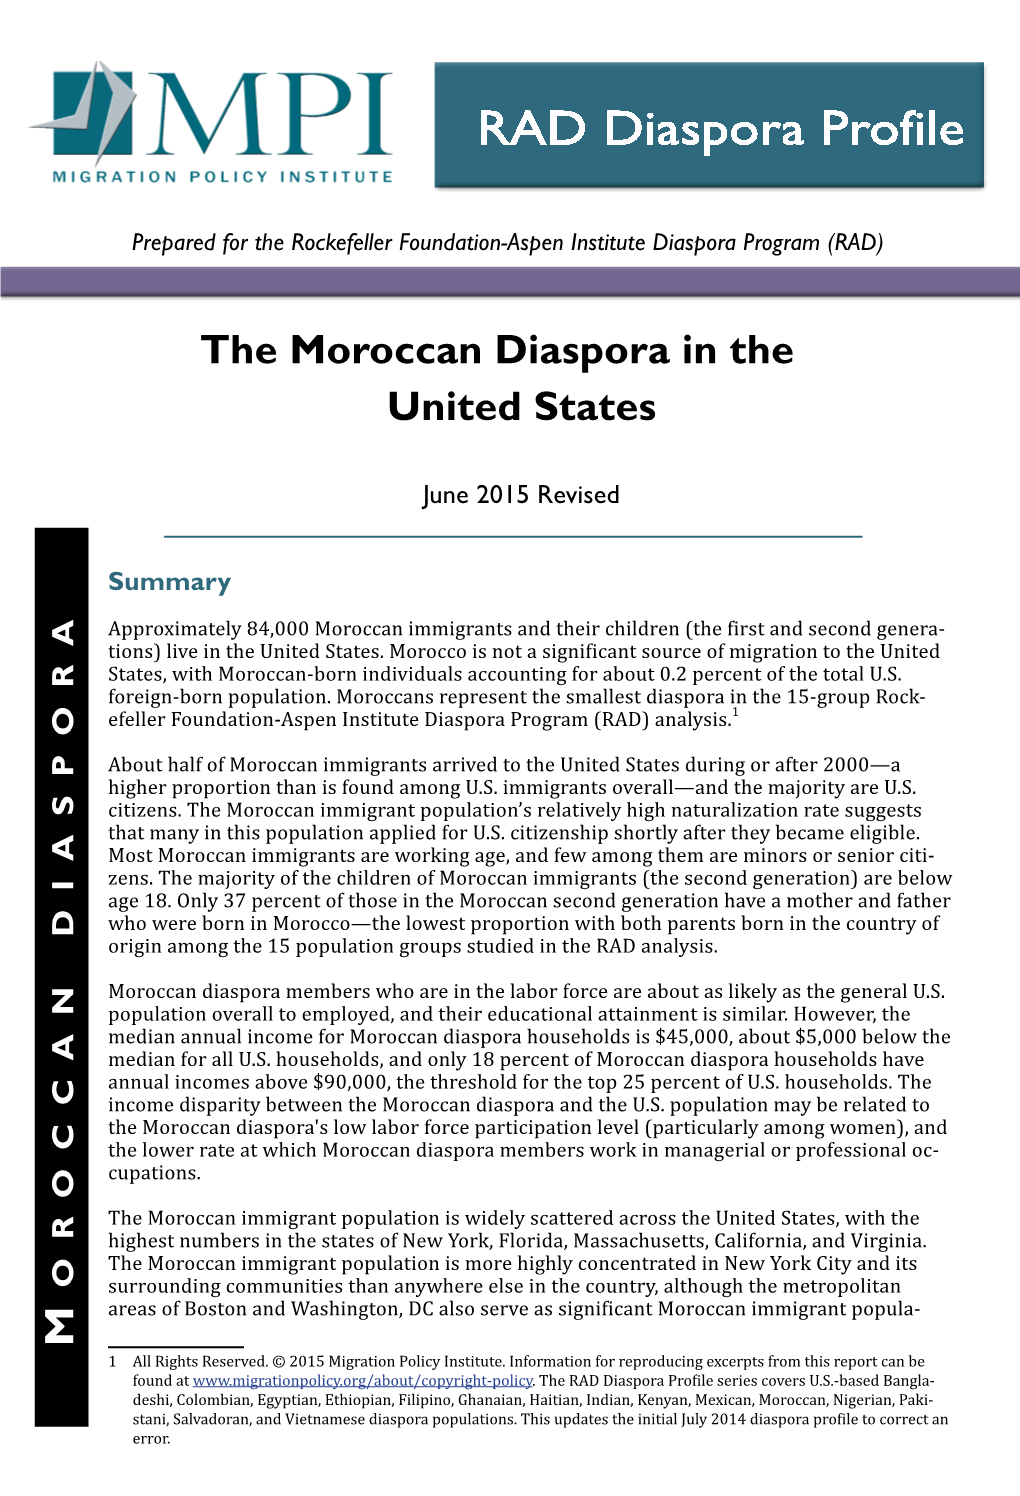 The Moroccan Diaspora in the United States